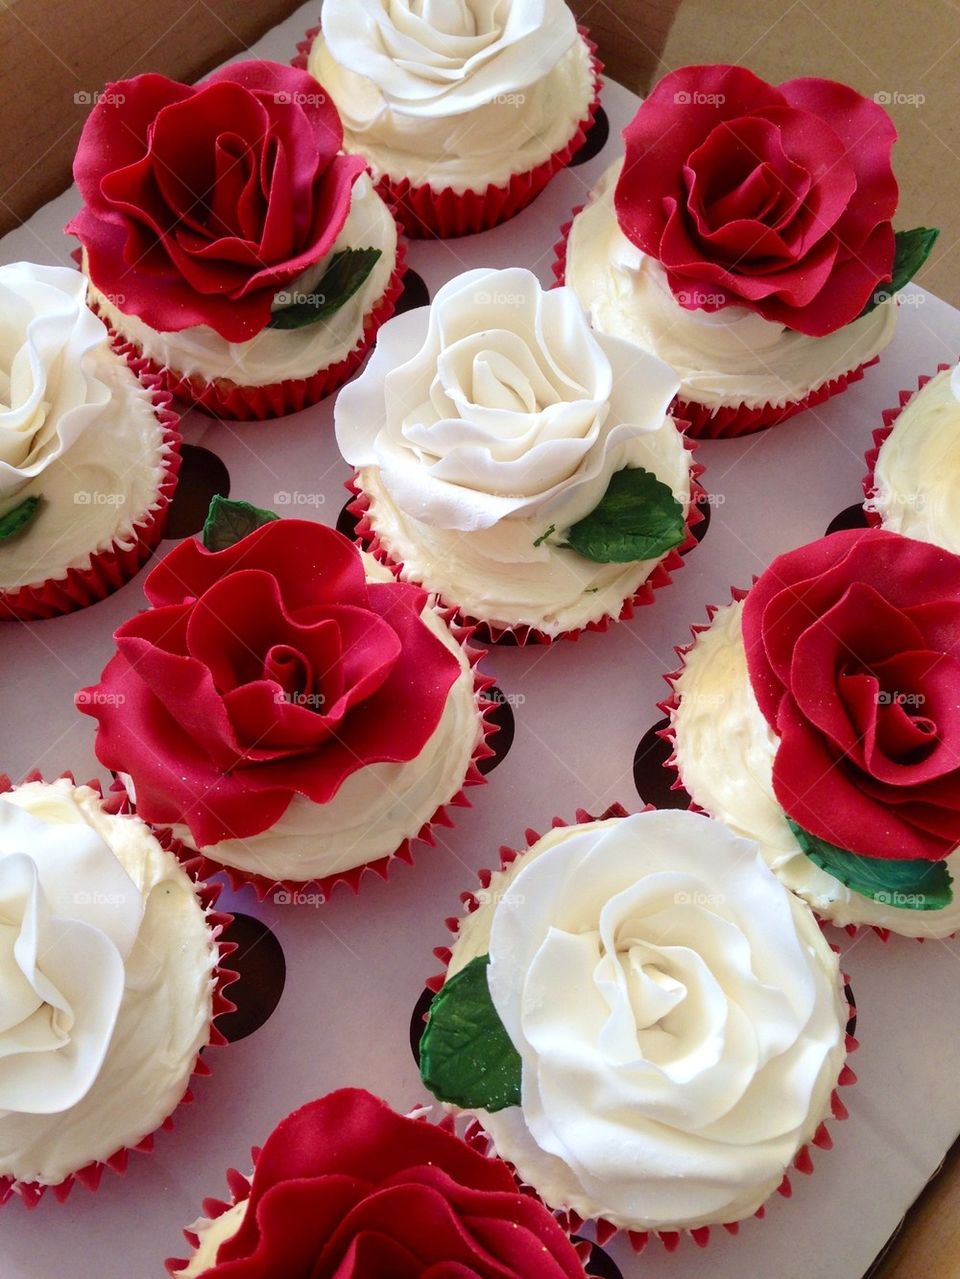 Sugar paste rose cupcakes